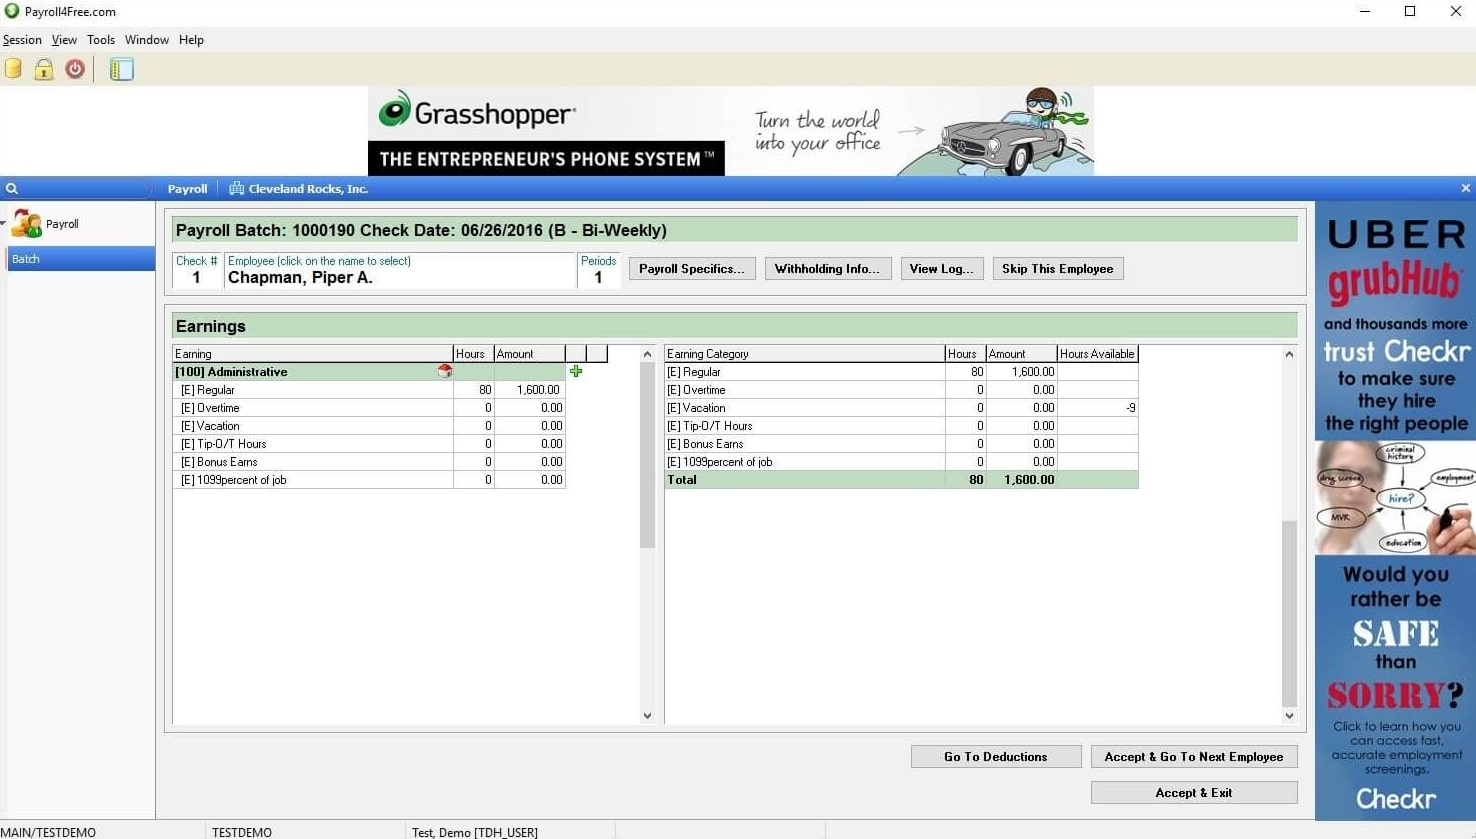 An image displaying Payroll4Free's dashboard